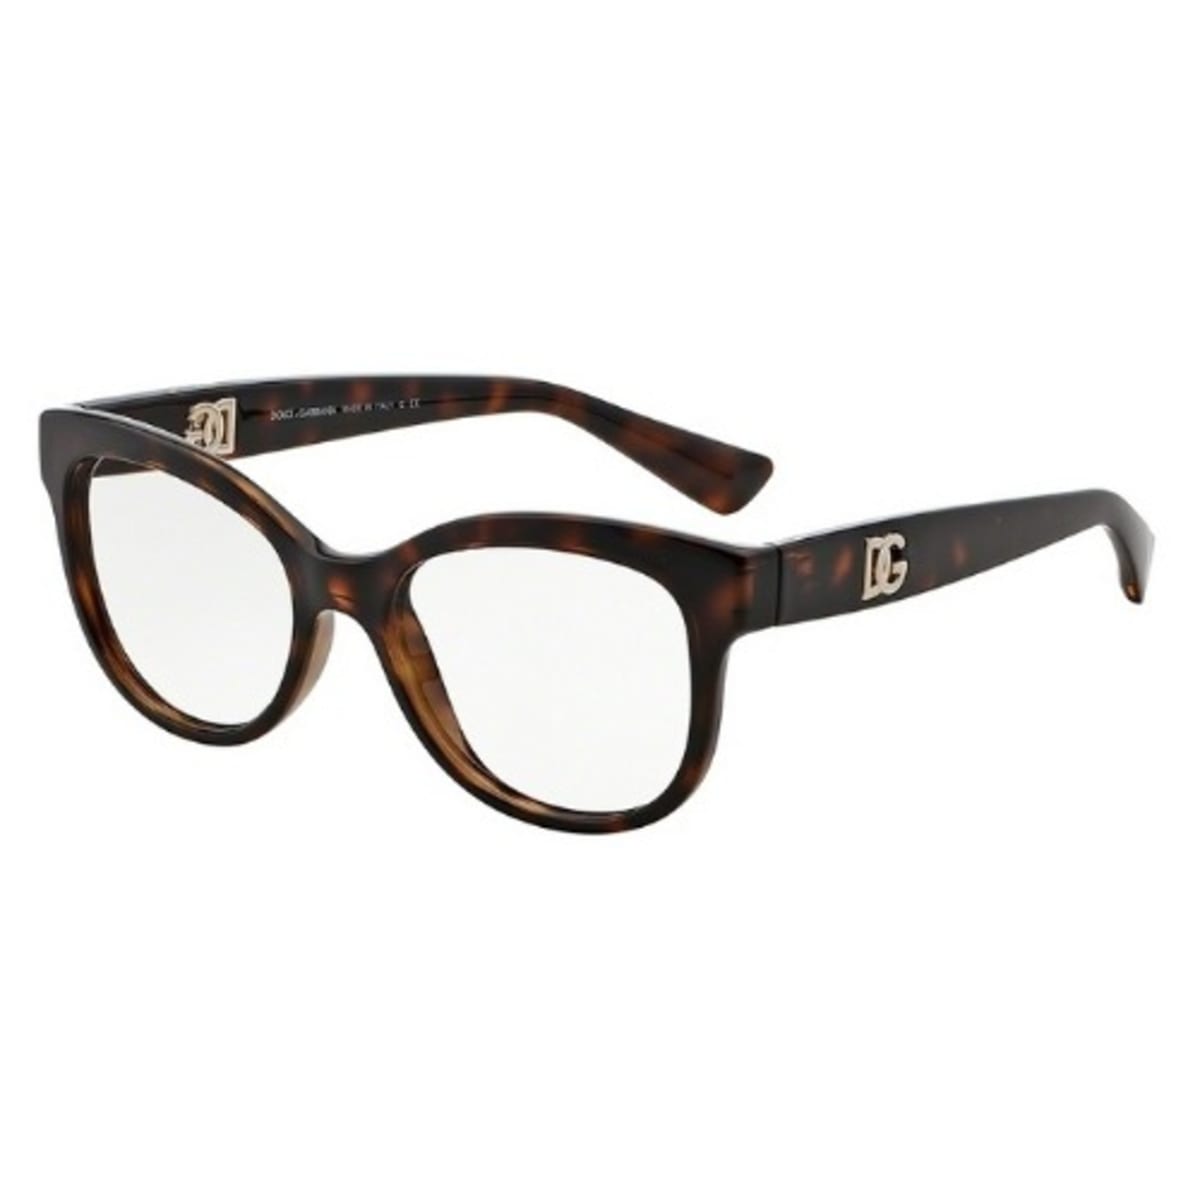 Dolce & Gabbana Women's Havana Cat-eye Eyeglasses - DG 5010 502